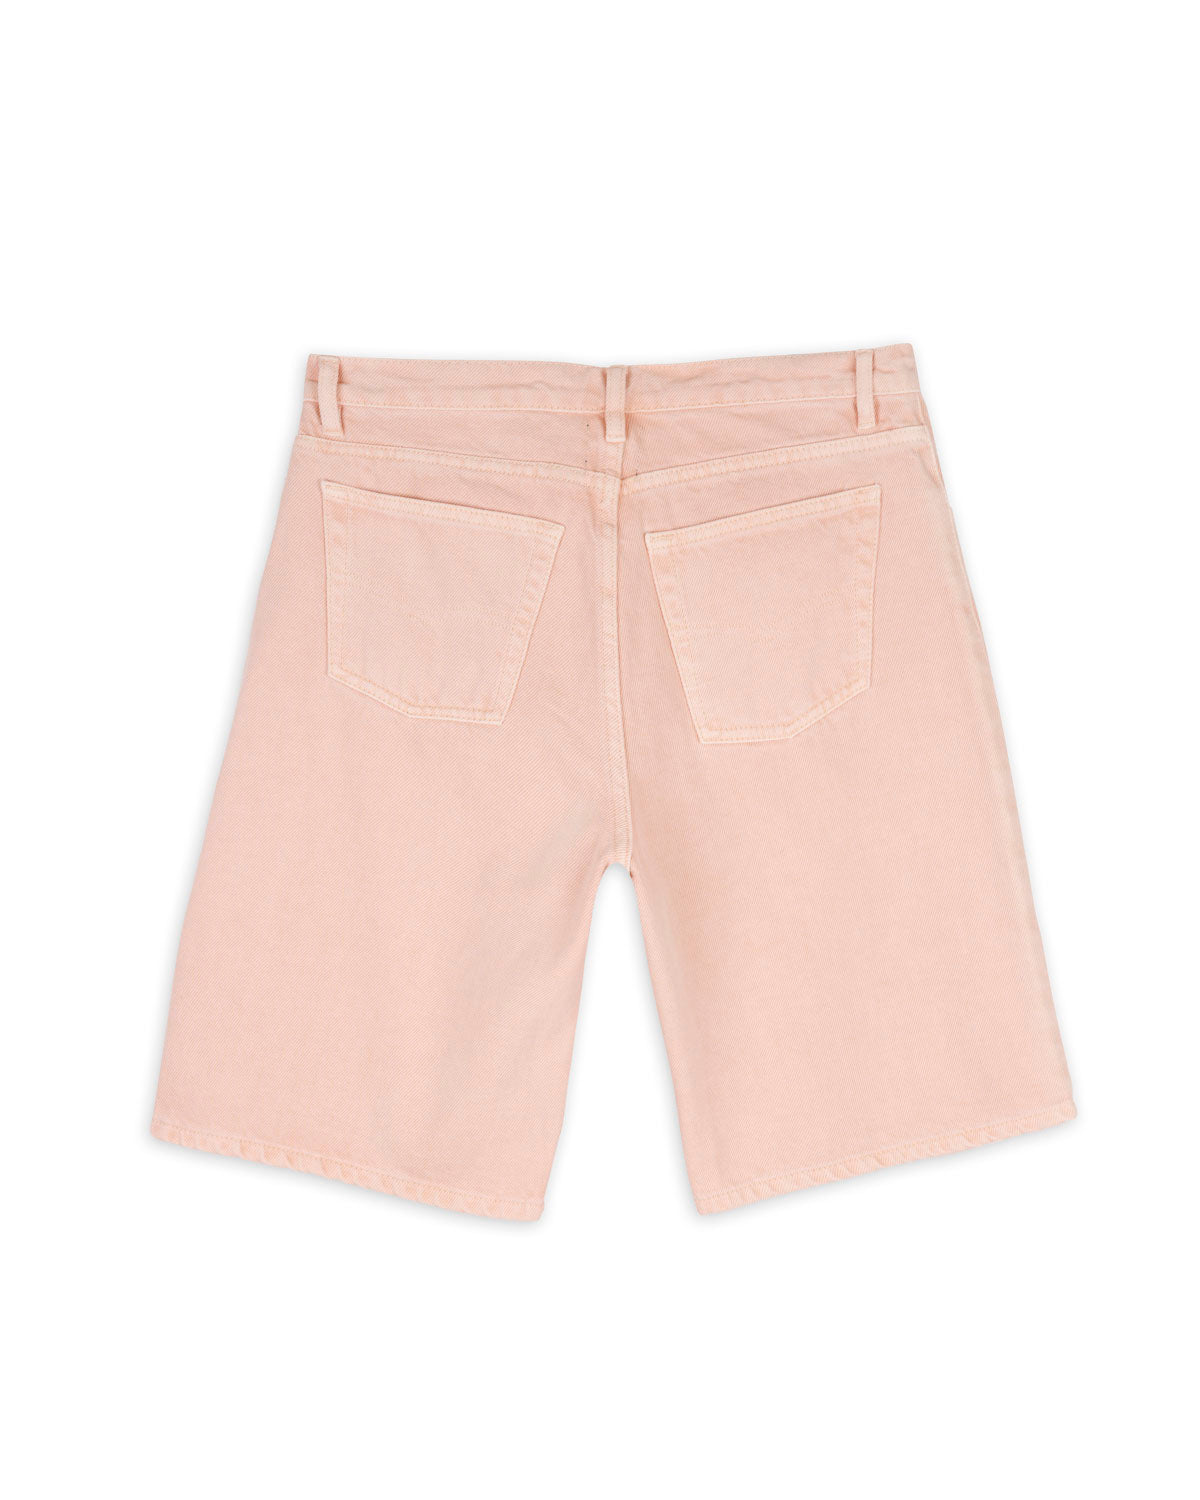 Women's Denim Whale Shorts, Pink